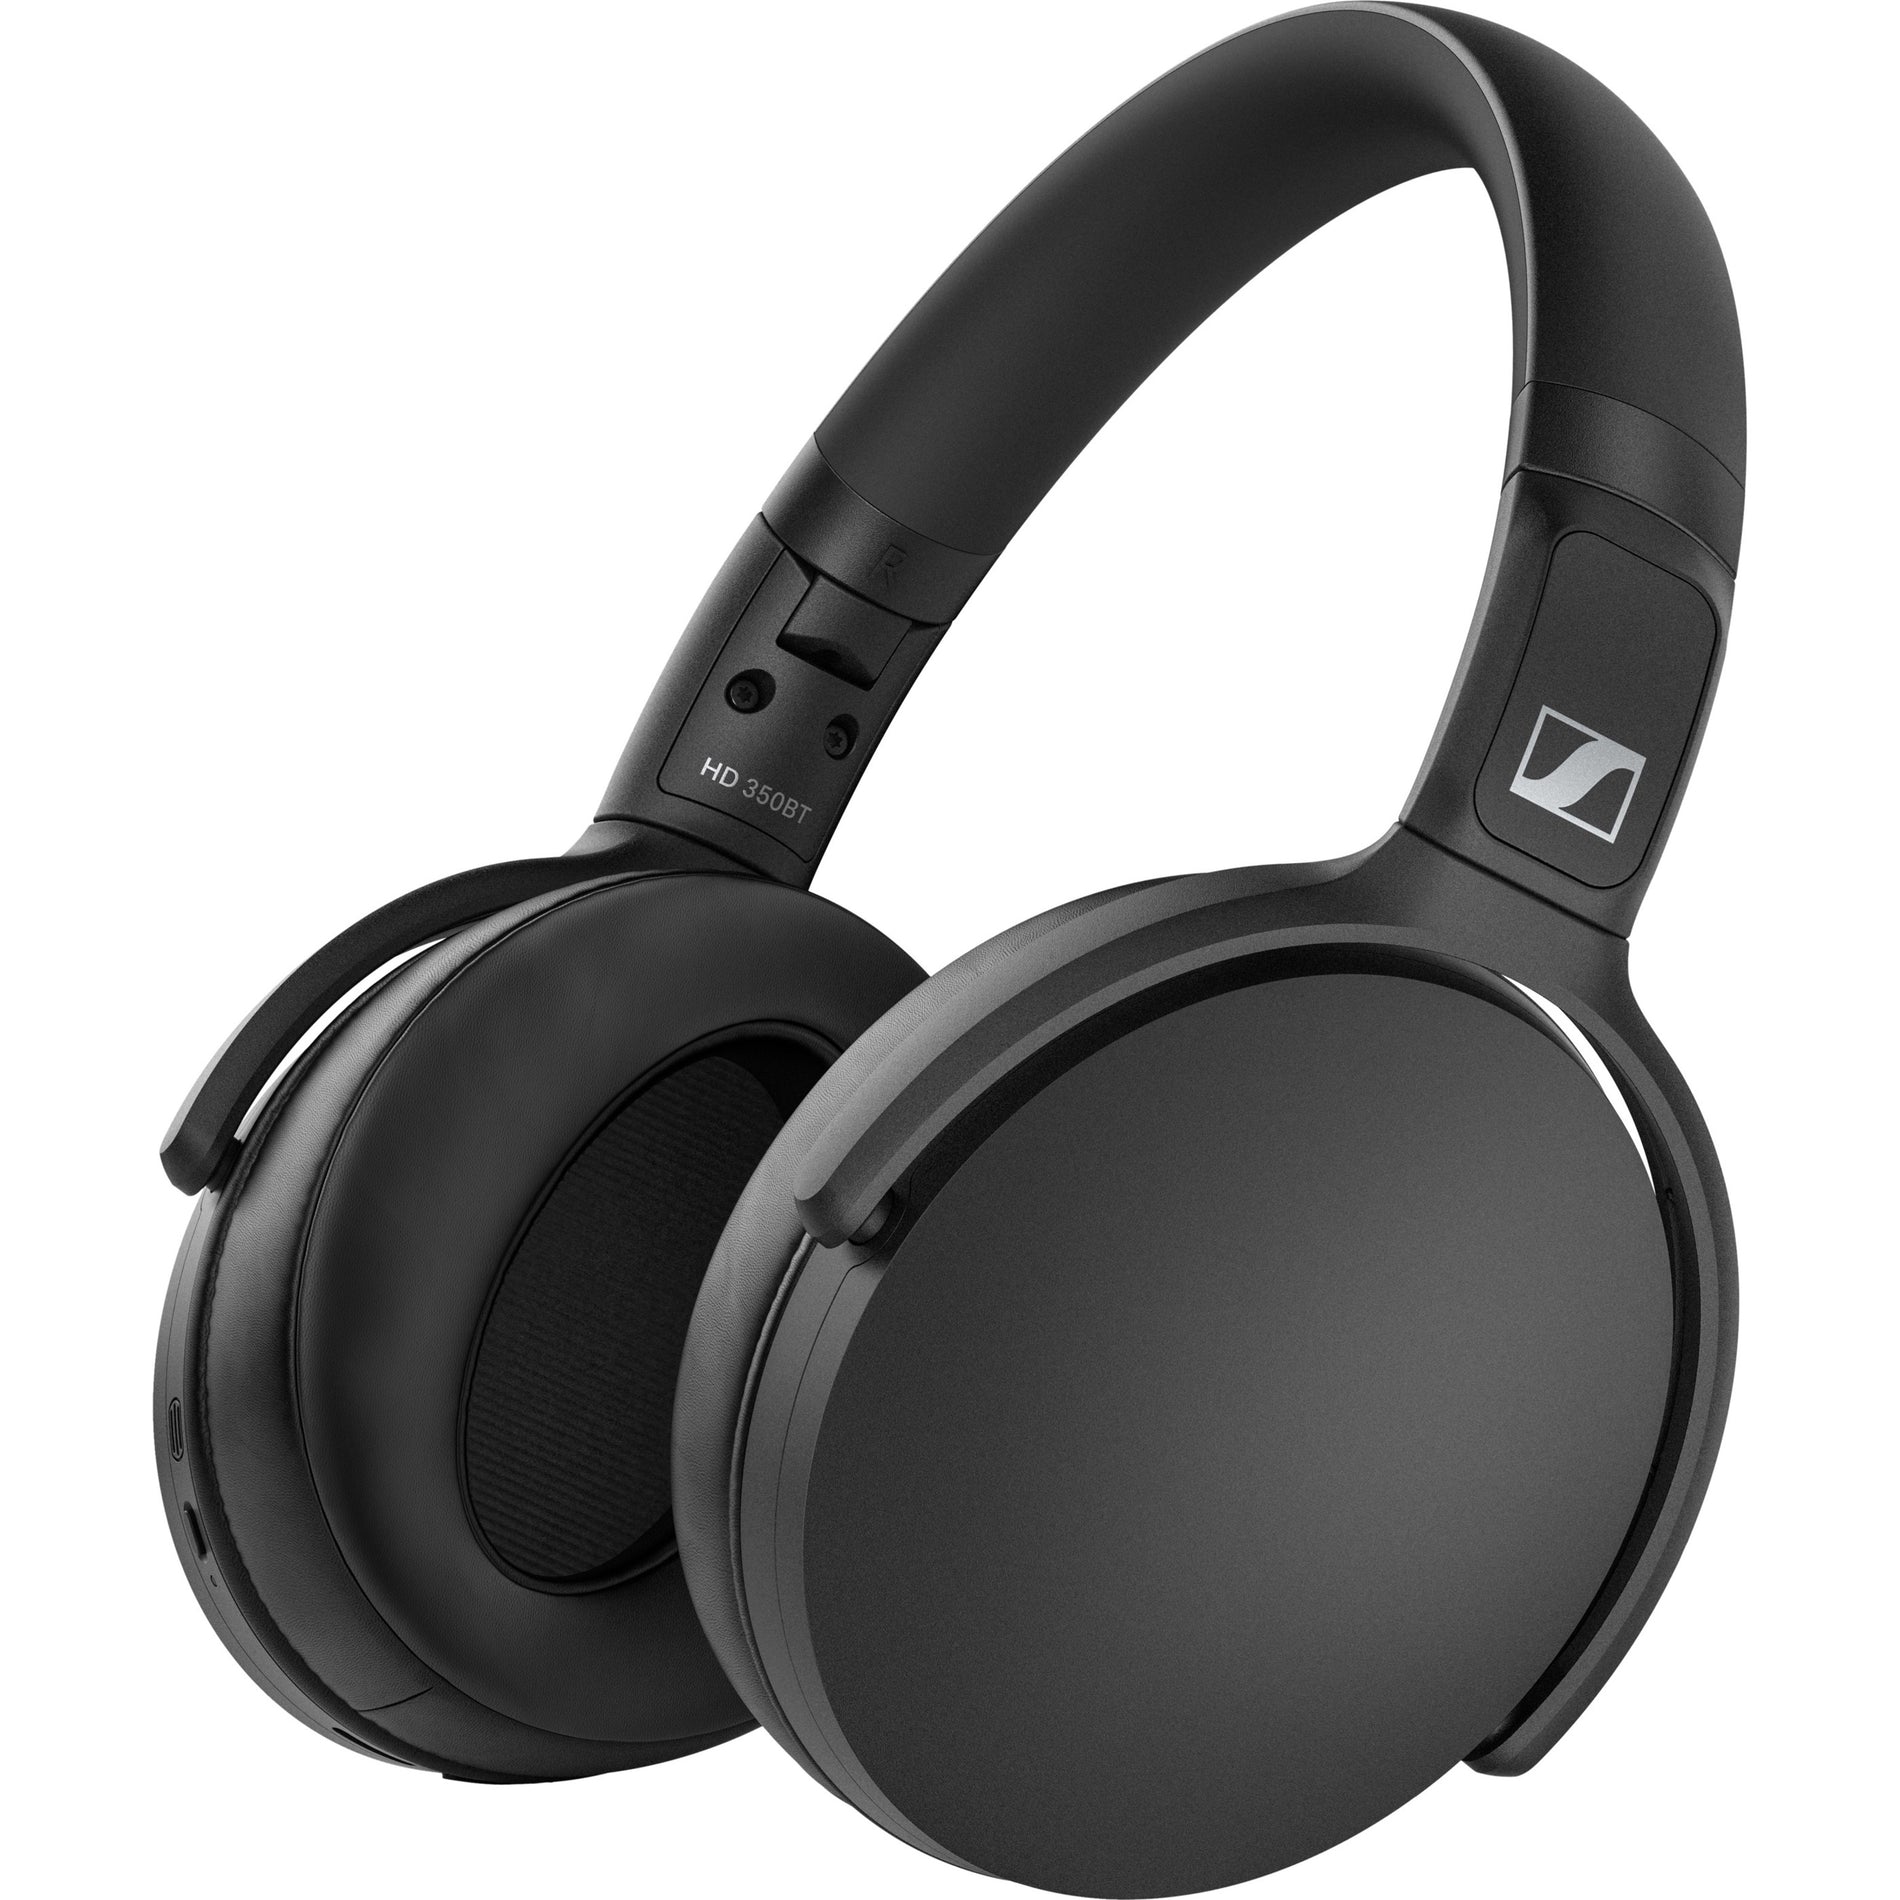 Sennheiser 508384 HD 350 BT Wireless headphones, Over-the-head, Stereo Sound, Bluetooth, 2 Year Warranty